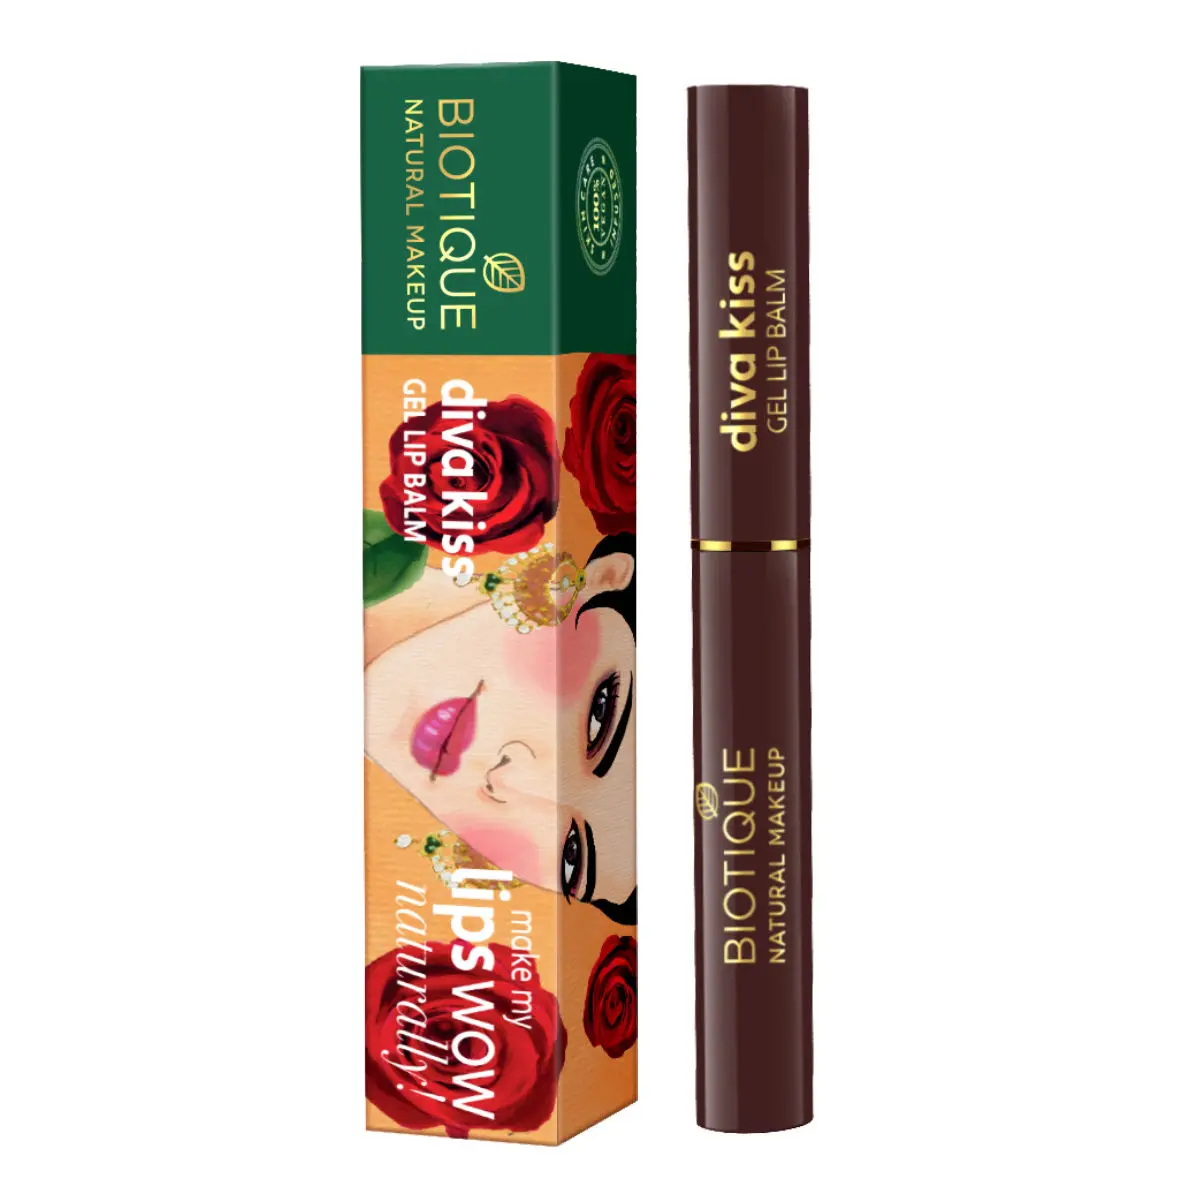 Biotique Natural Makeup Diva Kiss Gel Lip Balm (Mulberry Spritzer)(2 g)